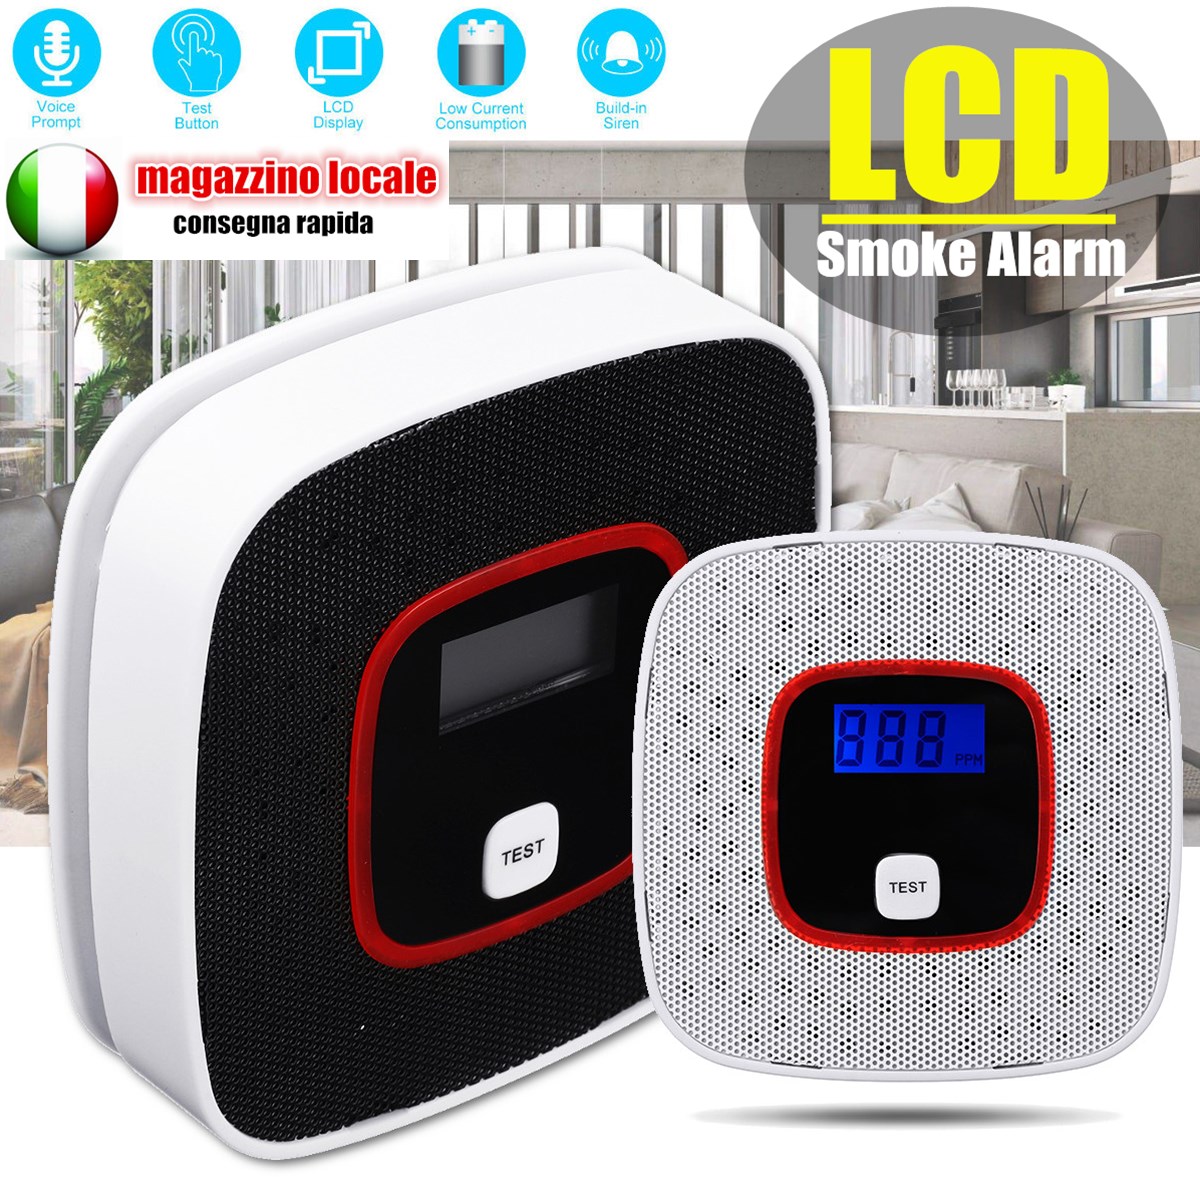 LCD-Smoke-Alarm-CO-Monoxide-Detector-Poisoning-Gas-Warning-Sensor-Monitor-Voice-1406970-2